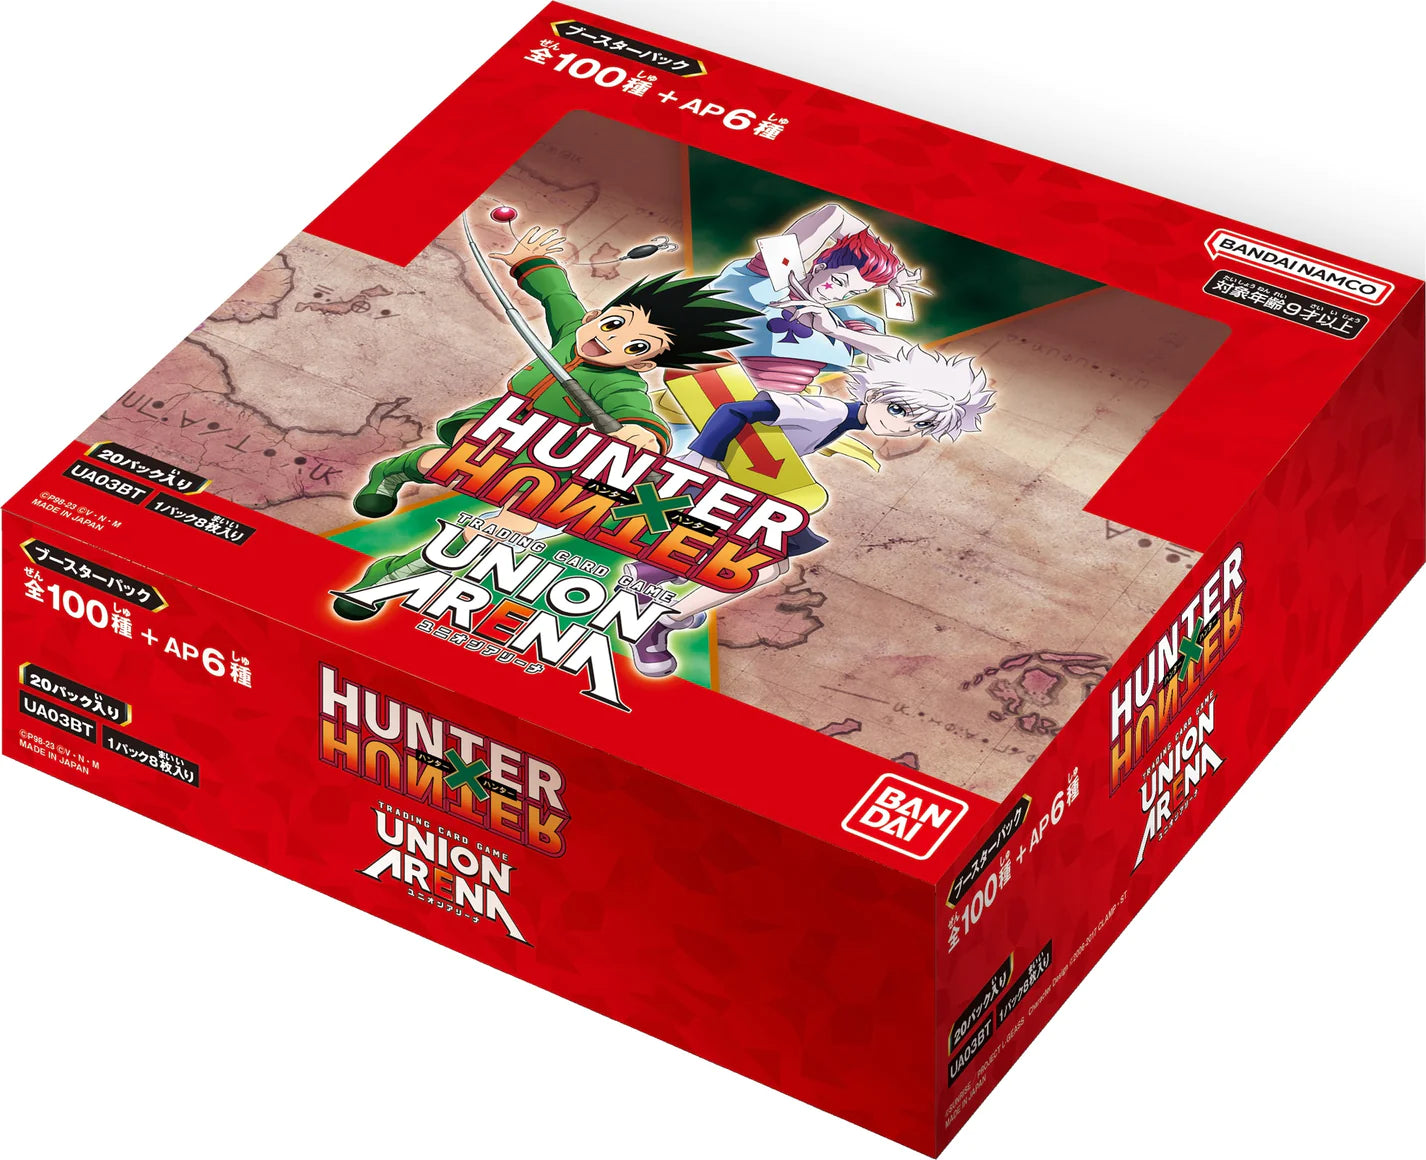 Union arena card game [Hunter x Hunter] [booster box]